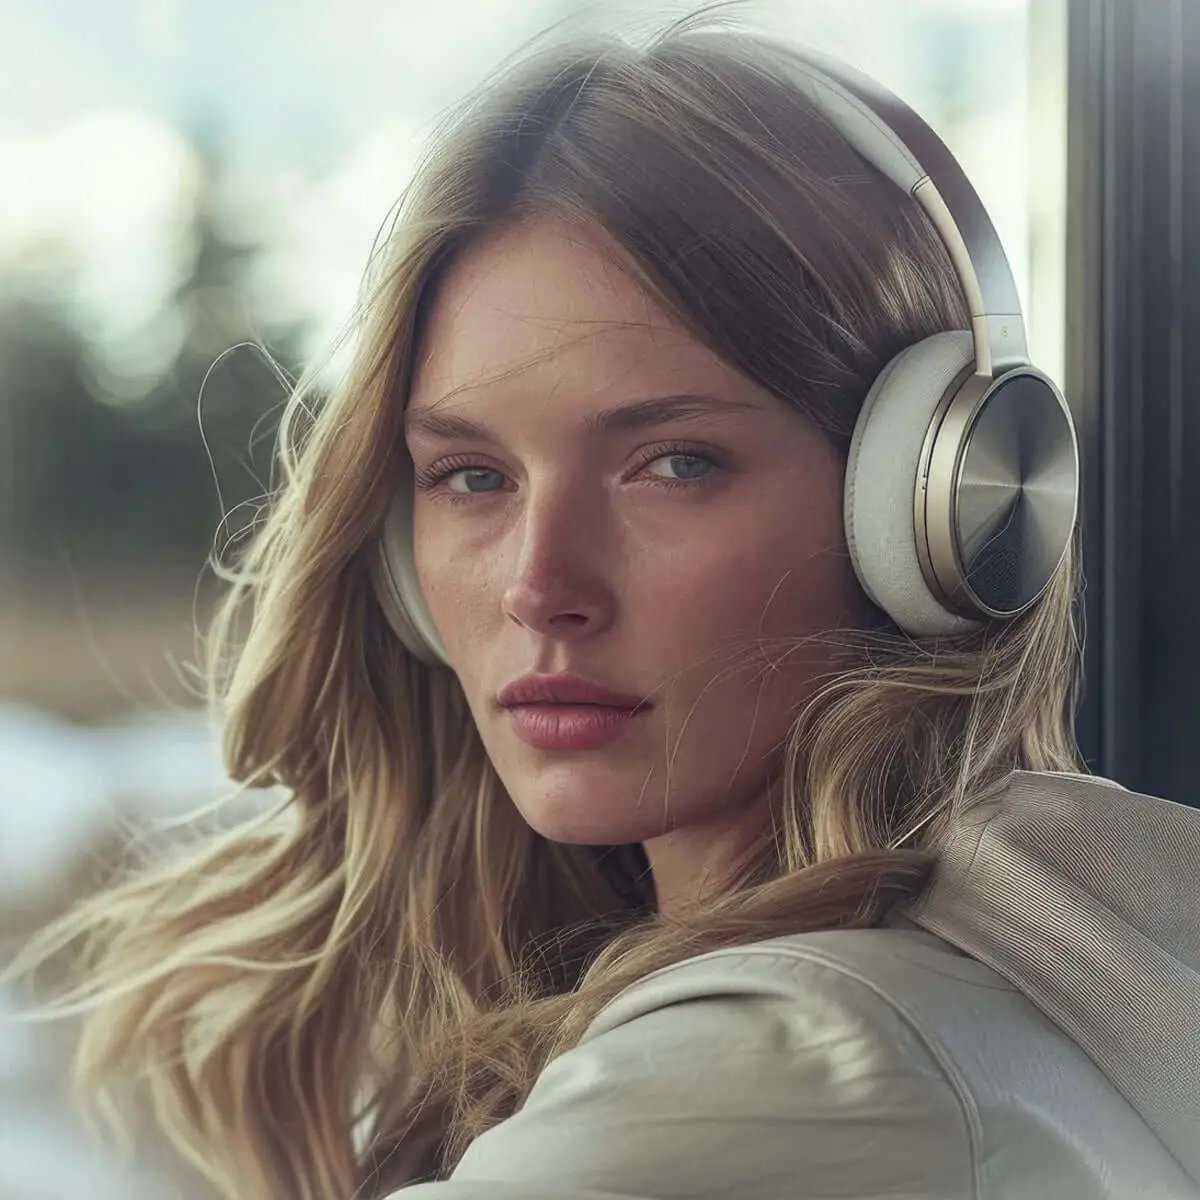 A woman wearing wireless bluetooth headphones.